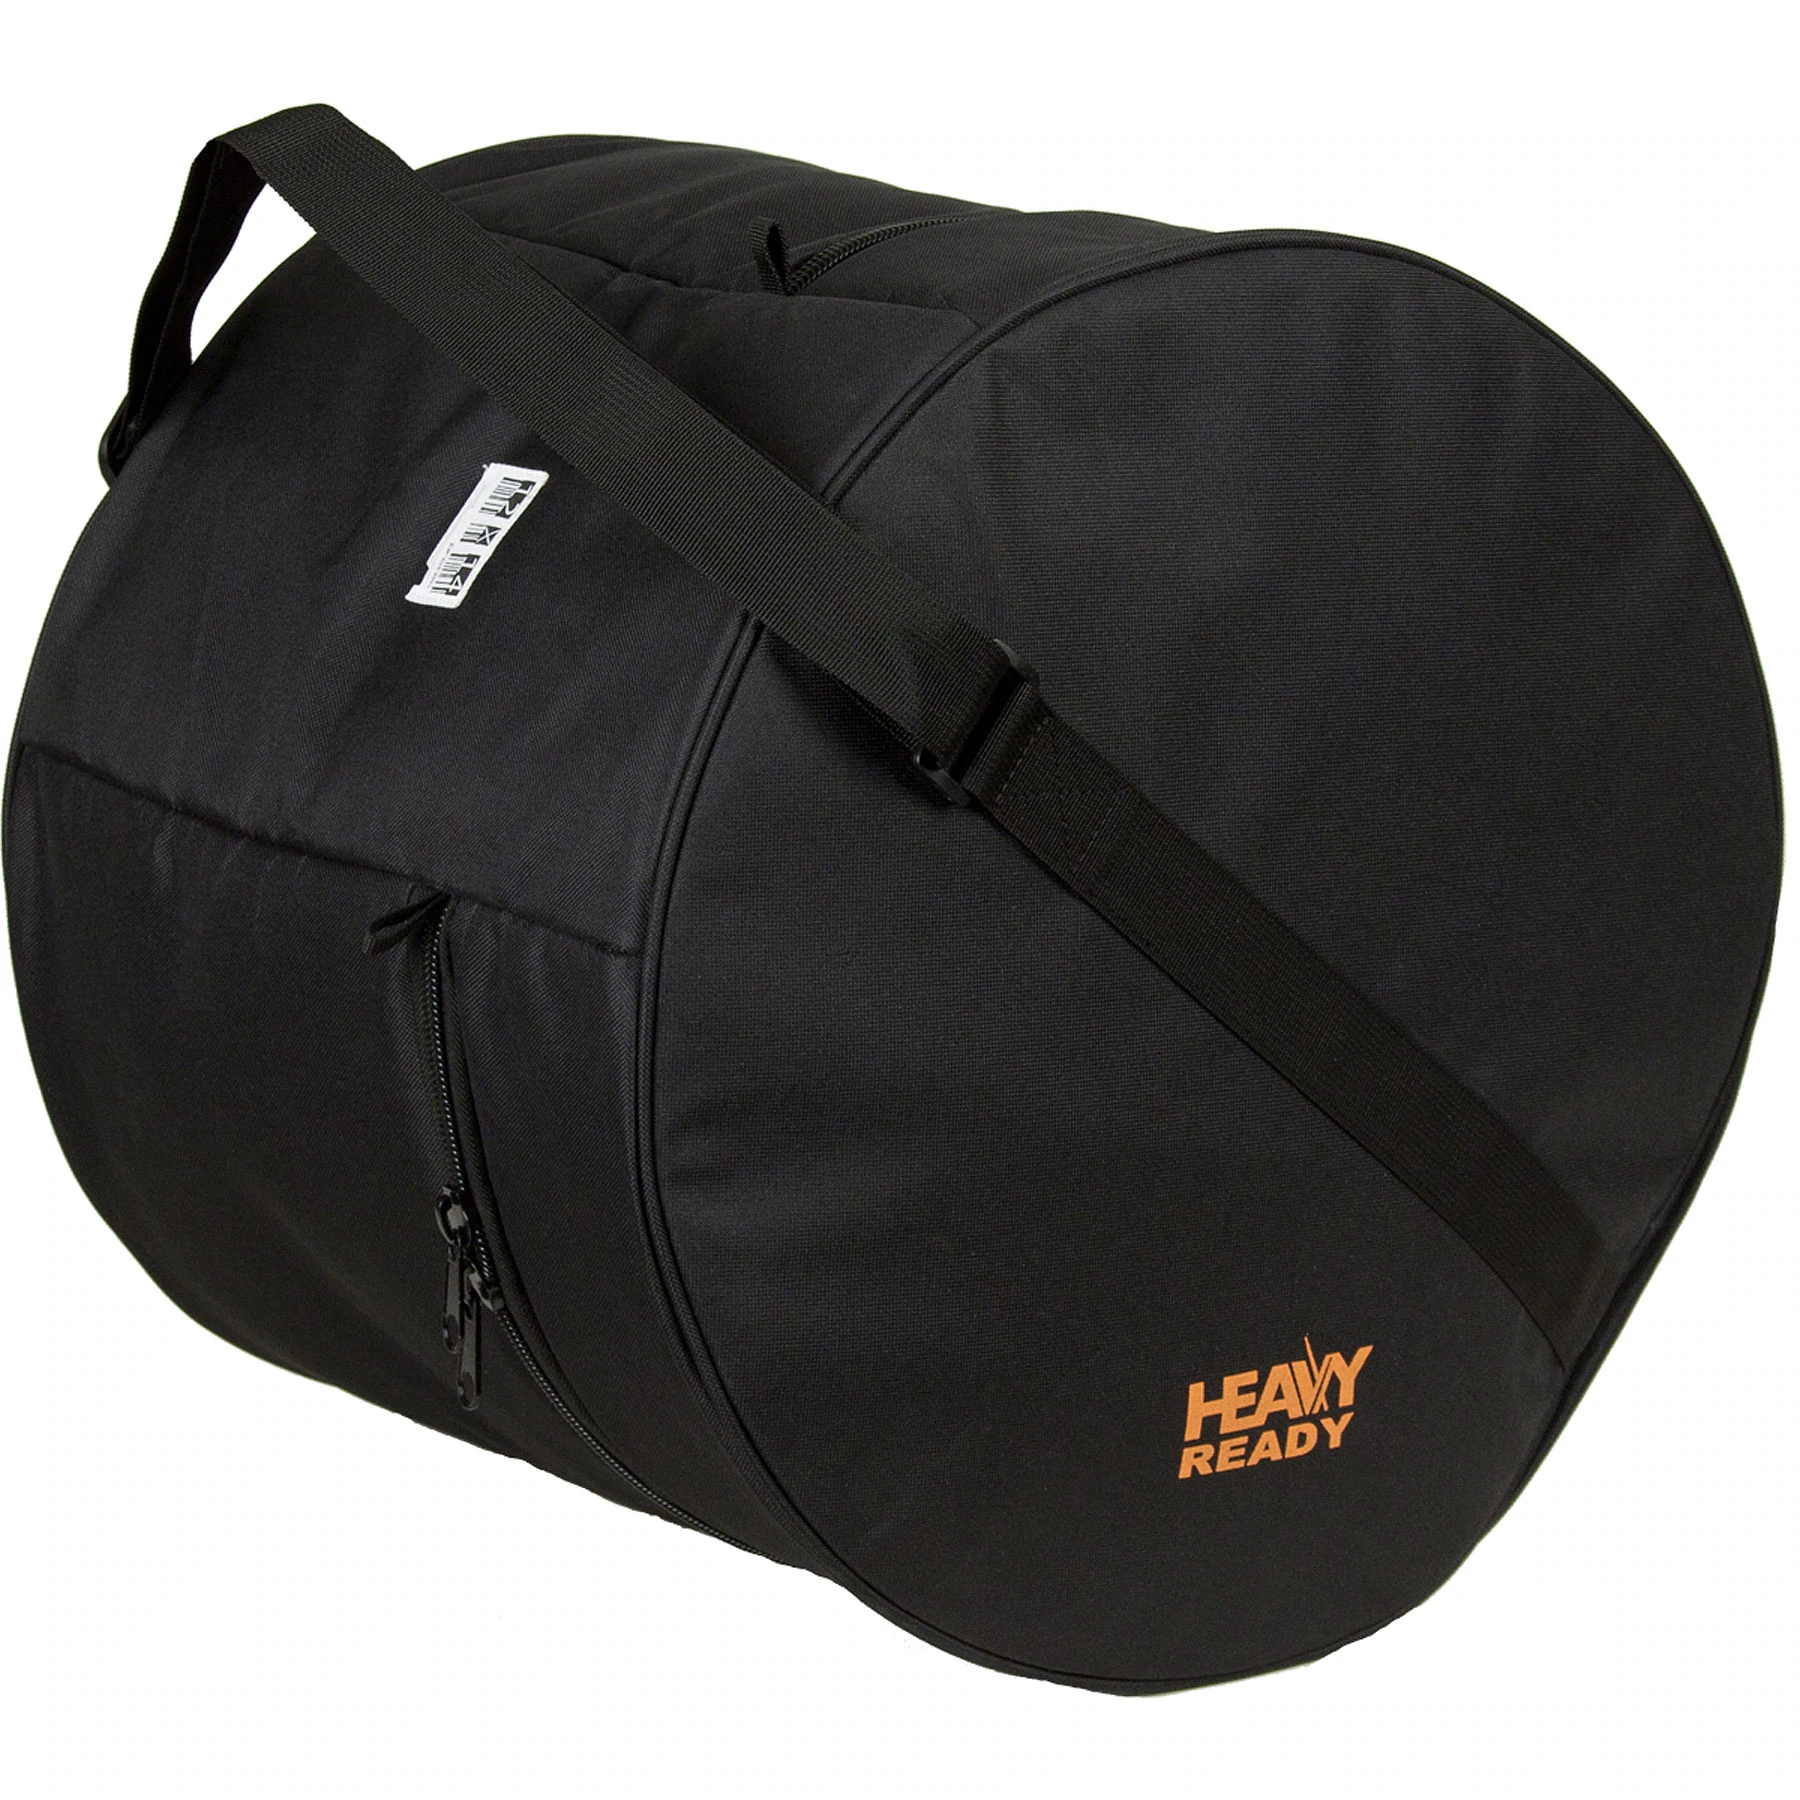 PROTEC Heavy Ready Padded Tom Bag 14x14